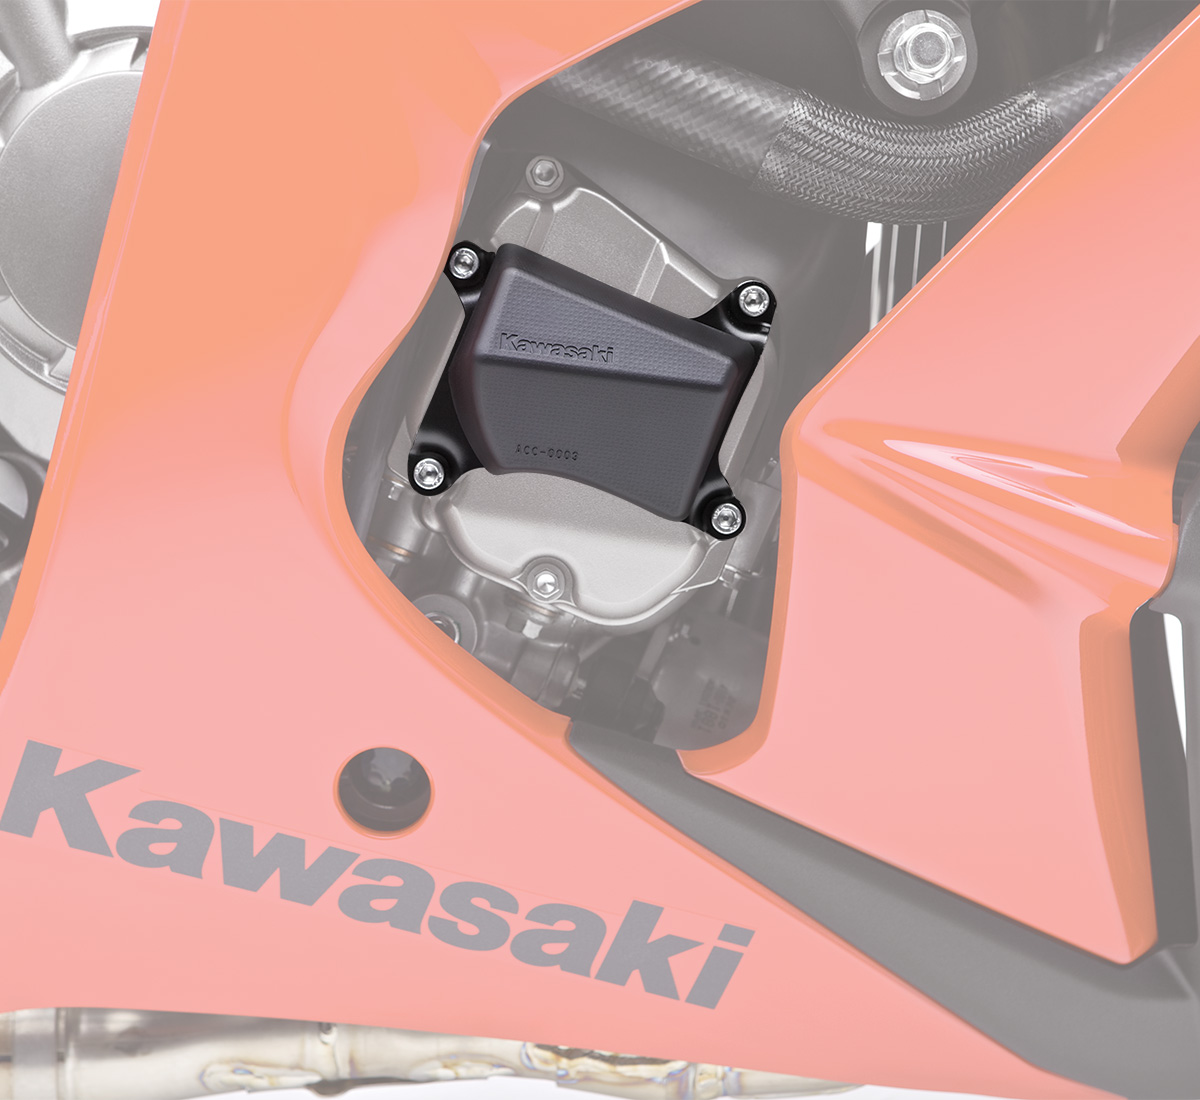 2016 NINJA ZX 10R ABS KRT EDITION Supersport Motorcycle By Kawasaki